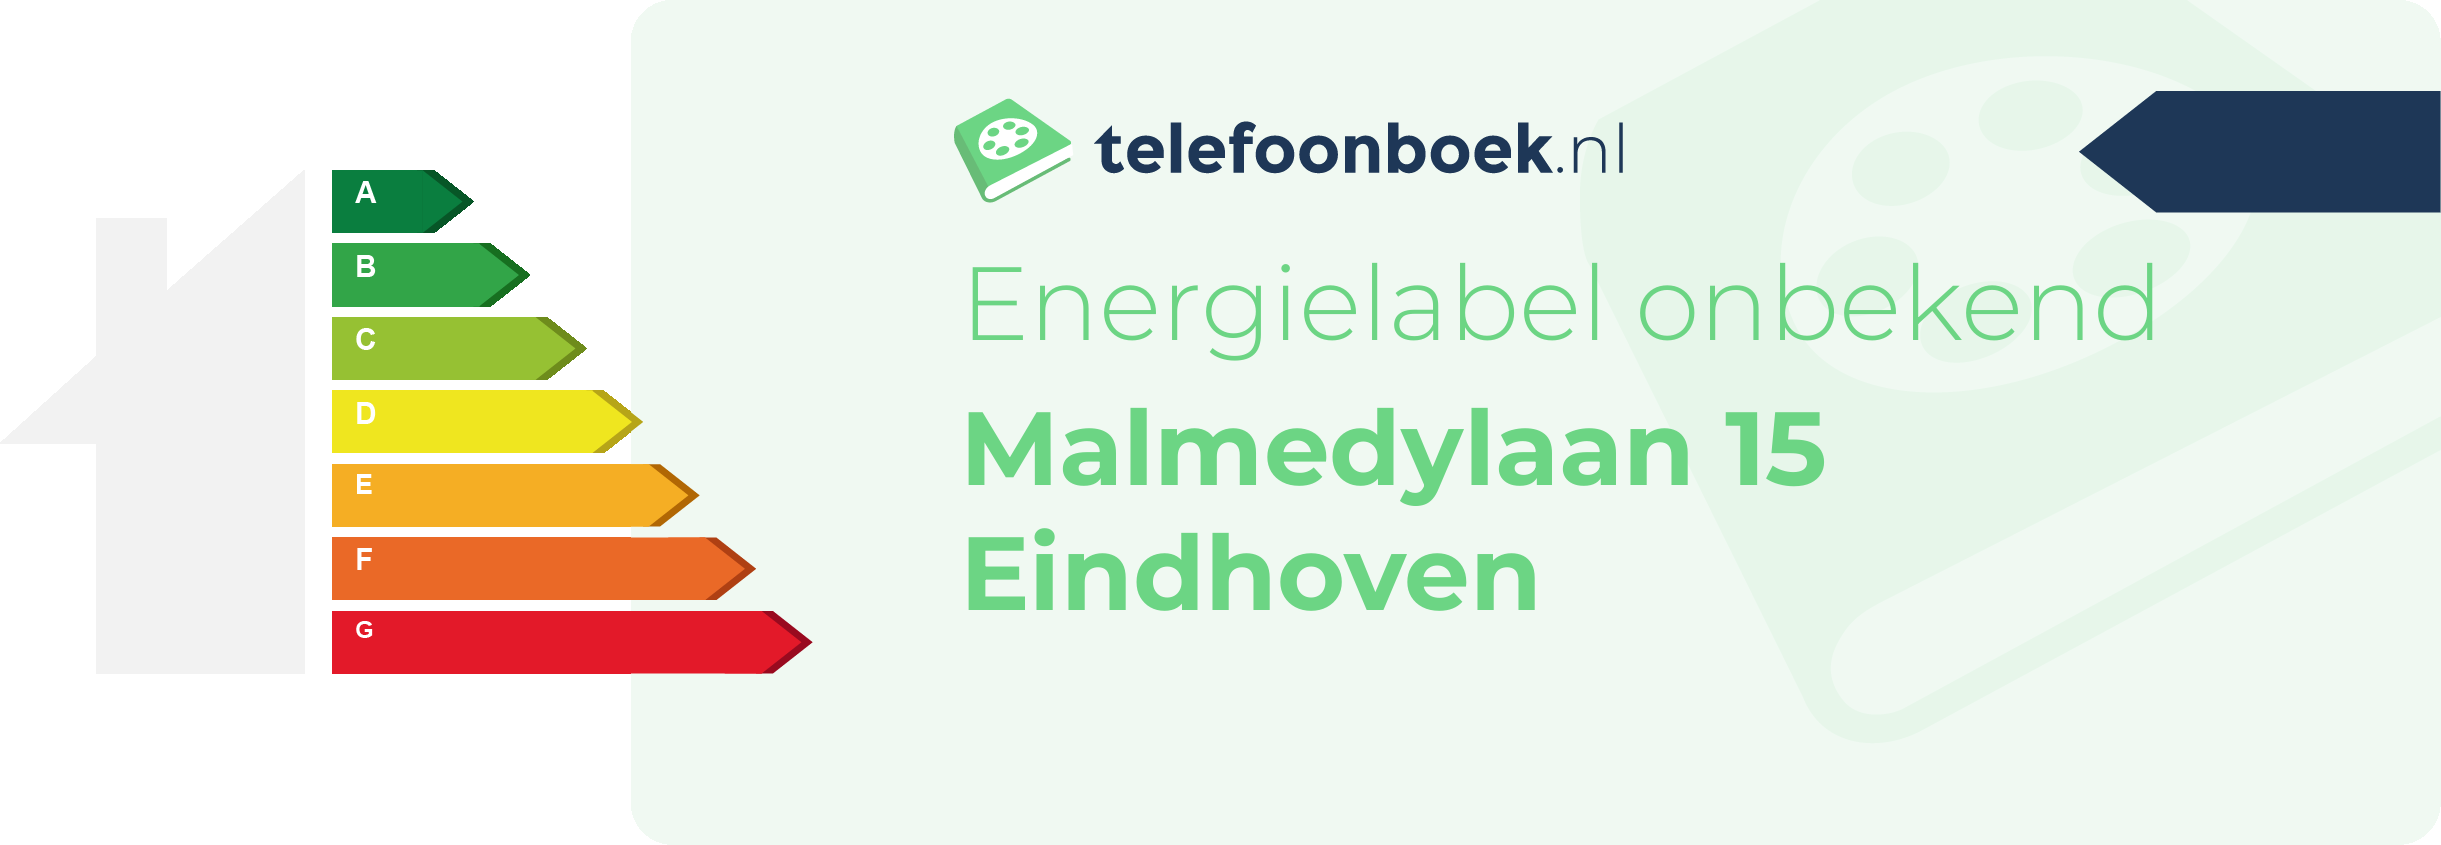 Energielabel Malmedylaan 15 Eindhoven